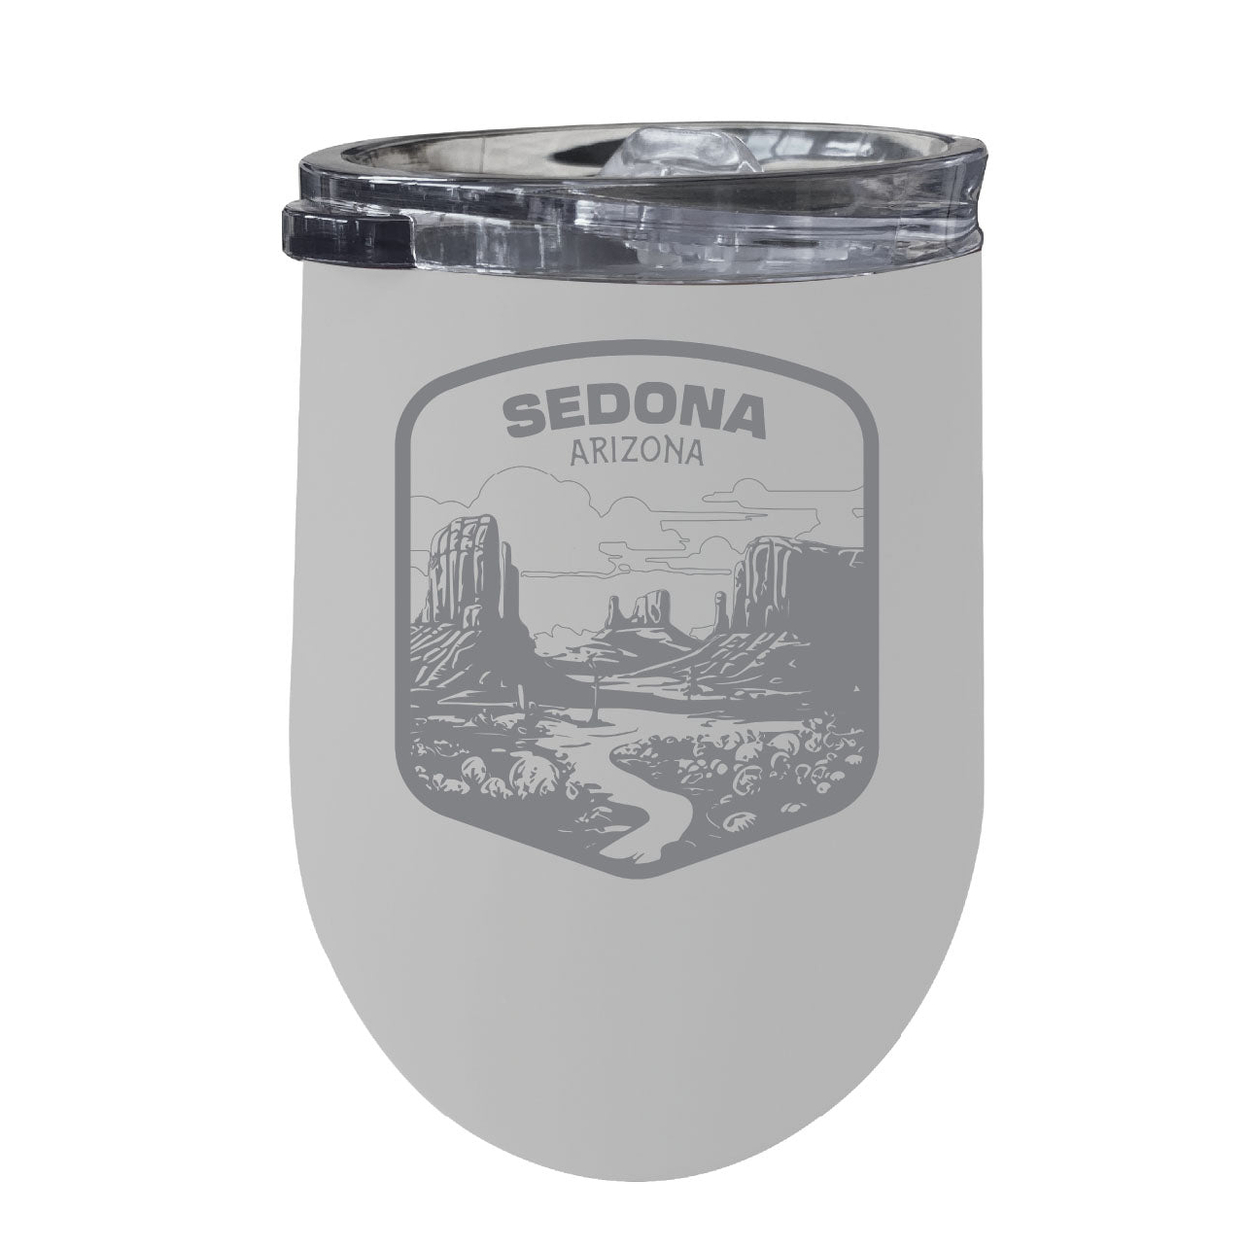 Sedona Arizona Souvenir 12 Oz Engraved Insulated Wine Stainless Steel Tumbler - Seafoam,,2-Pack